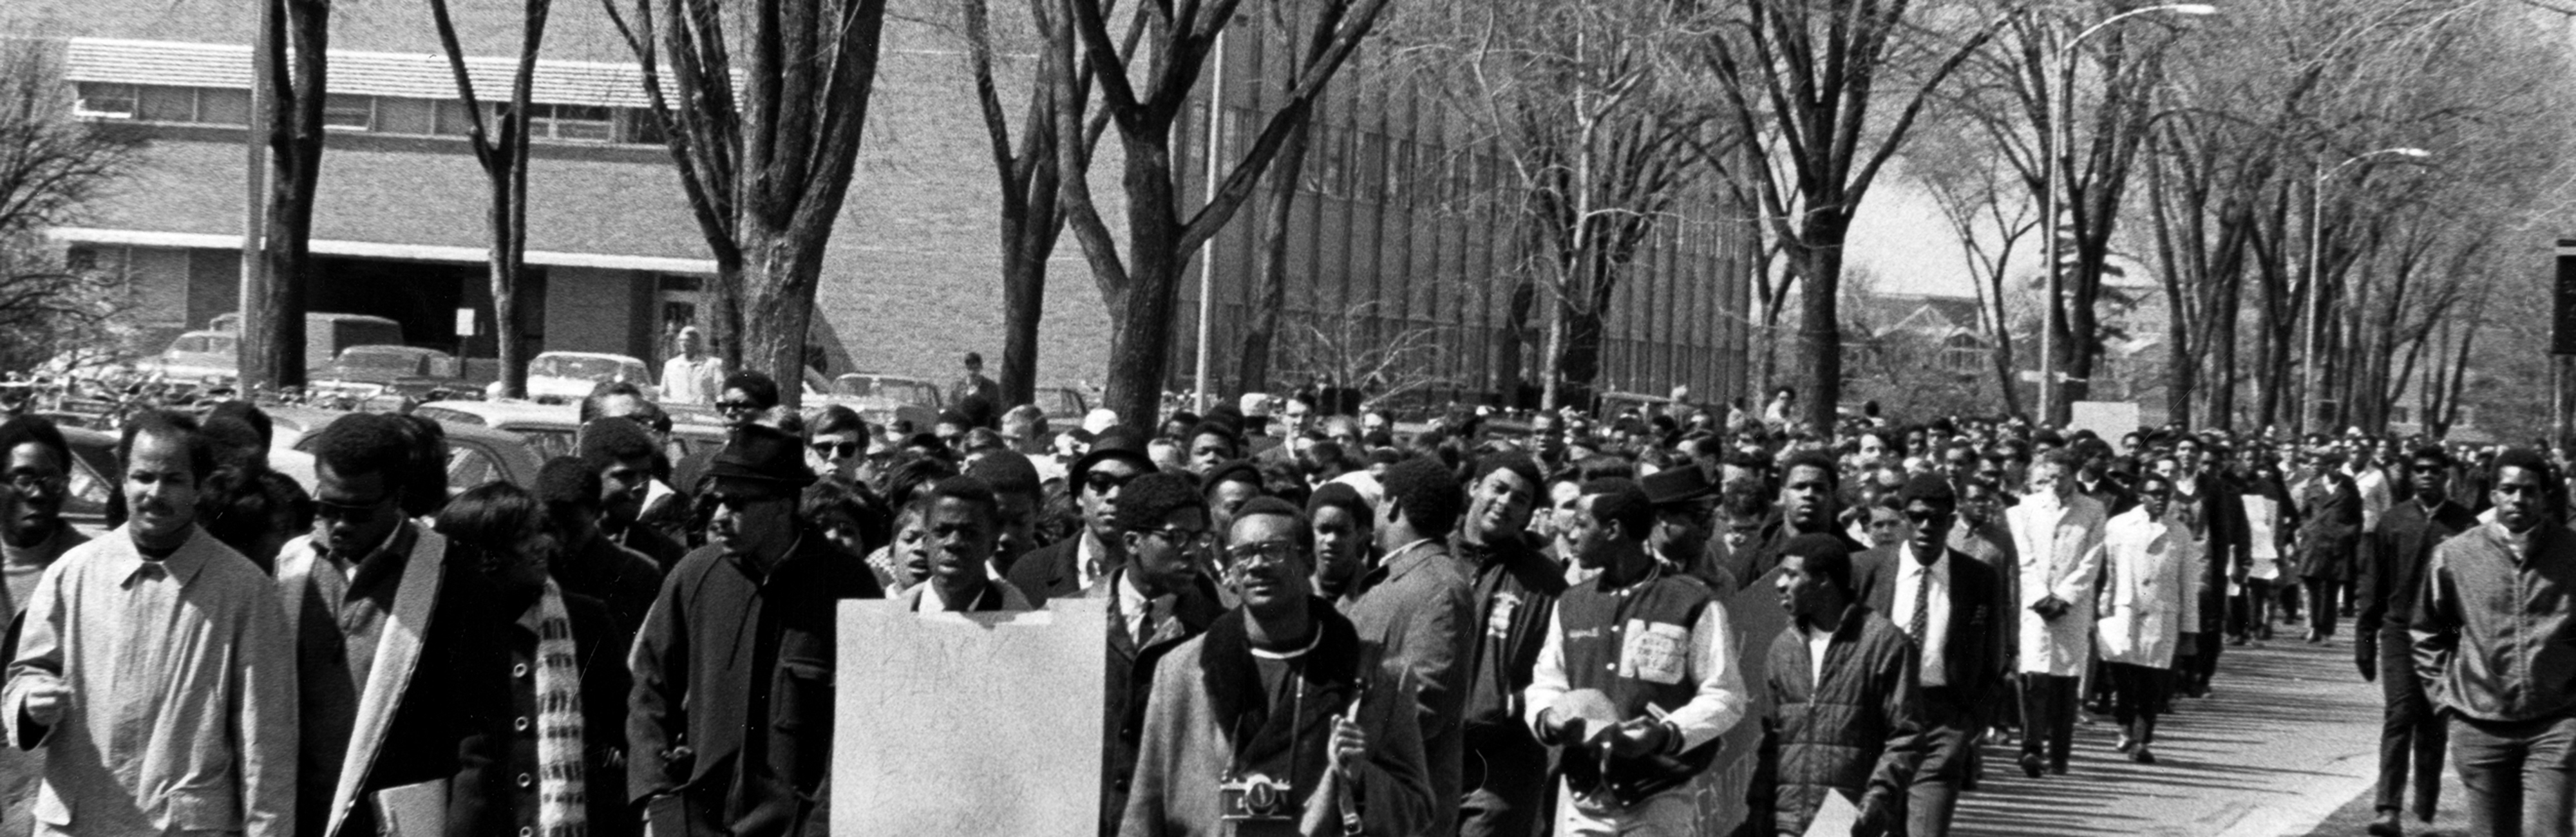 1960s campus march